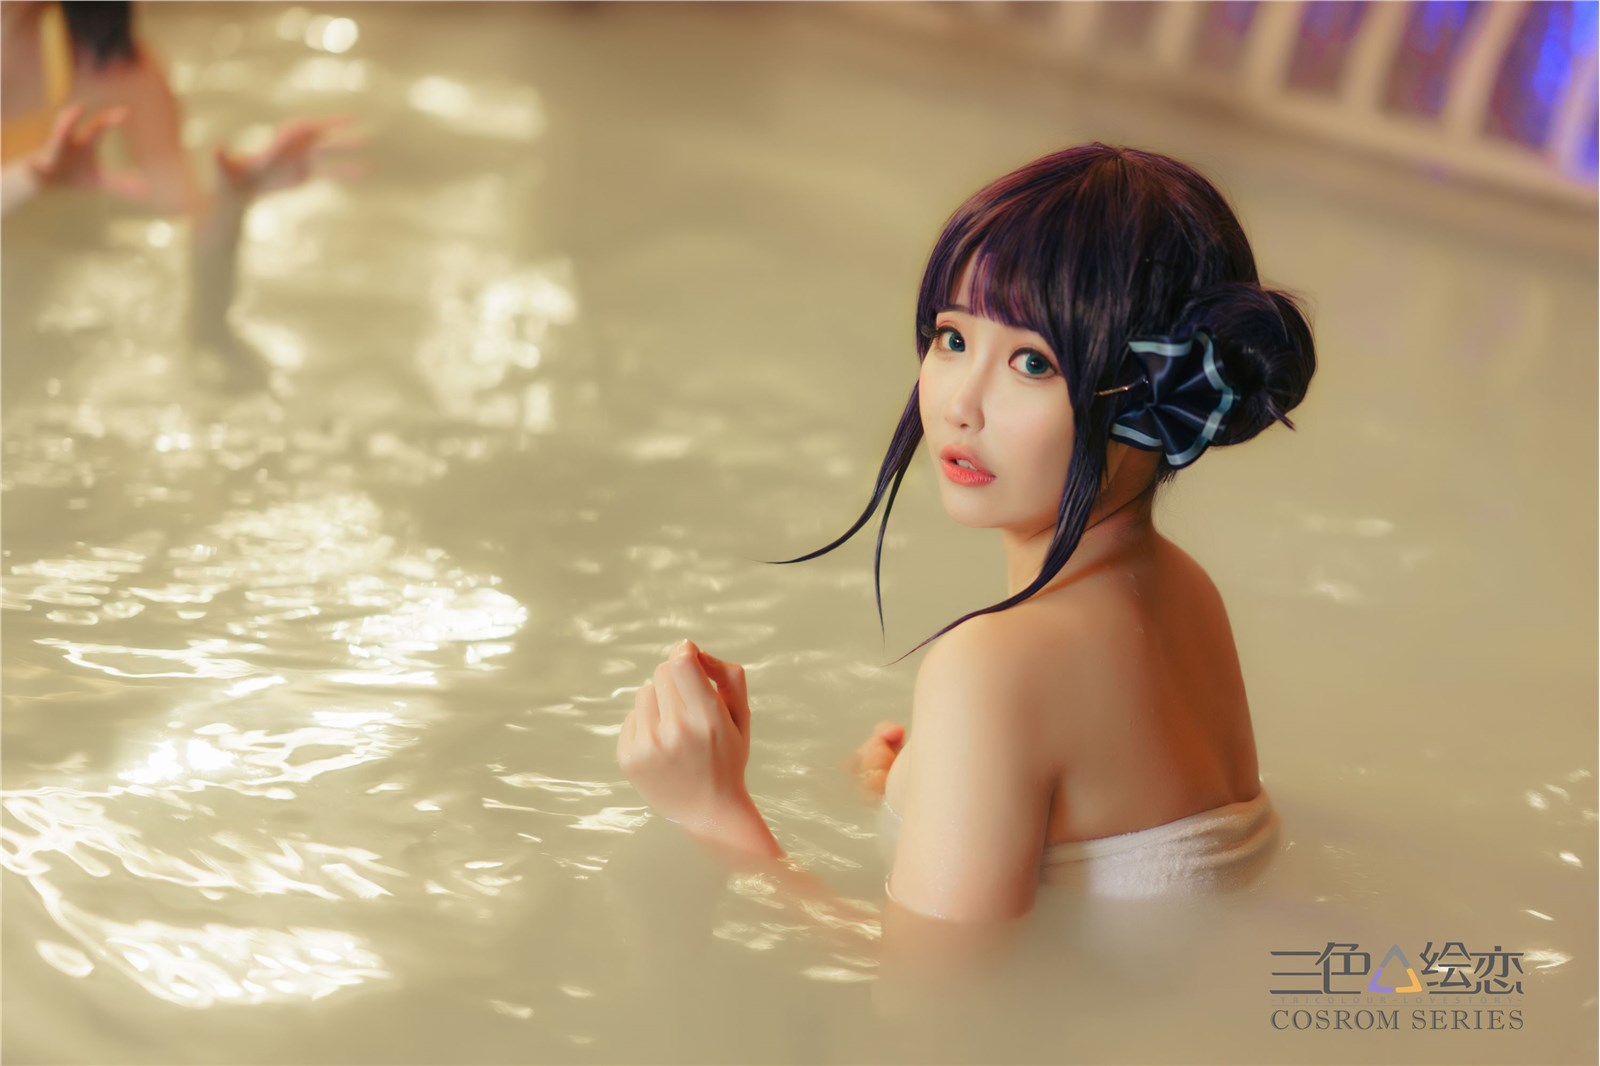 QitaroYaotang - You You Tri Color △ Drawing Love in Winter Hot Springs cosplay Wen Zhi - VioletWen(20)